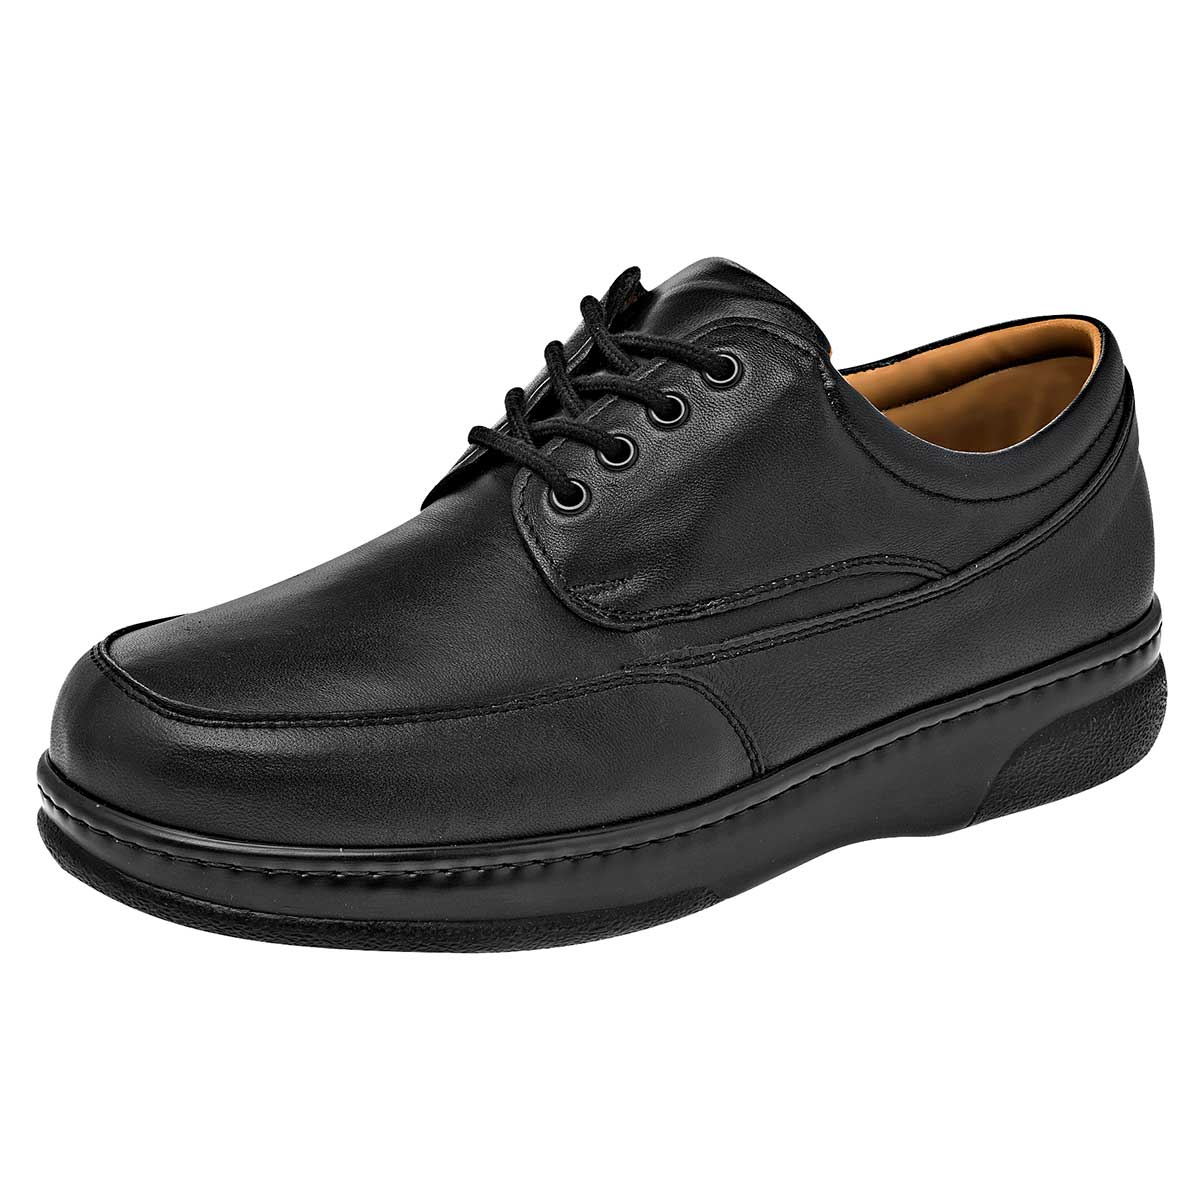 Pakar.com - Mayo: Regalos para mamá | Zapato especializado para hombre cod-52089